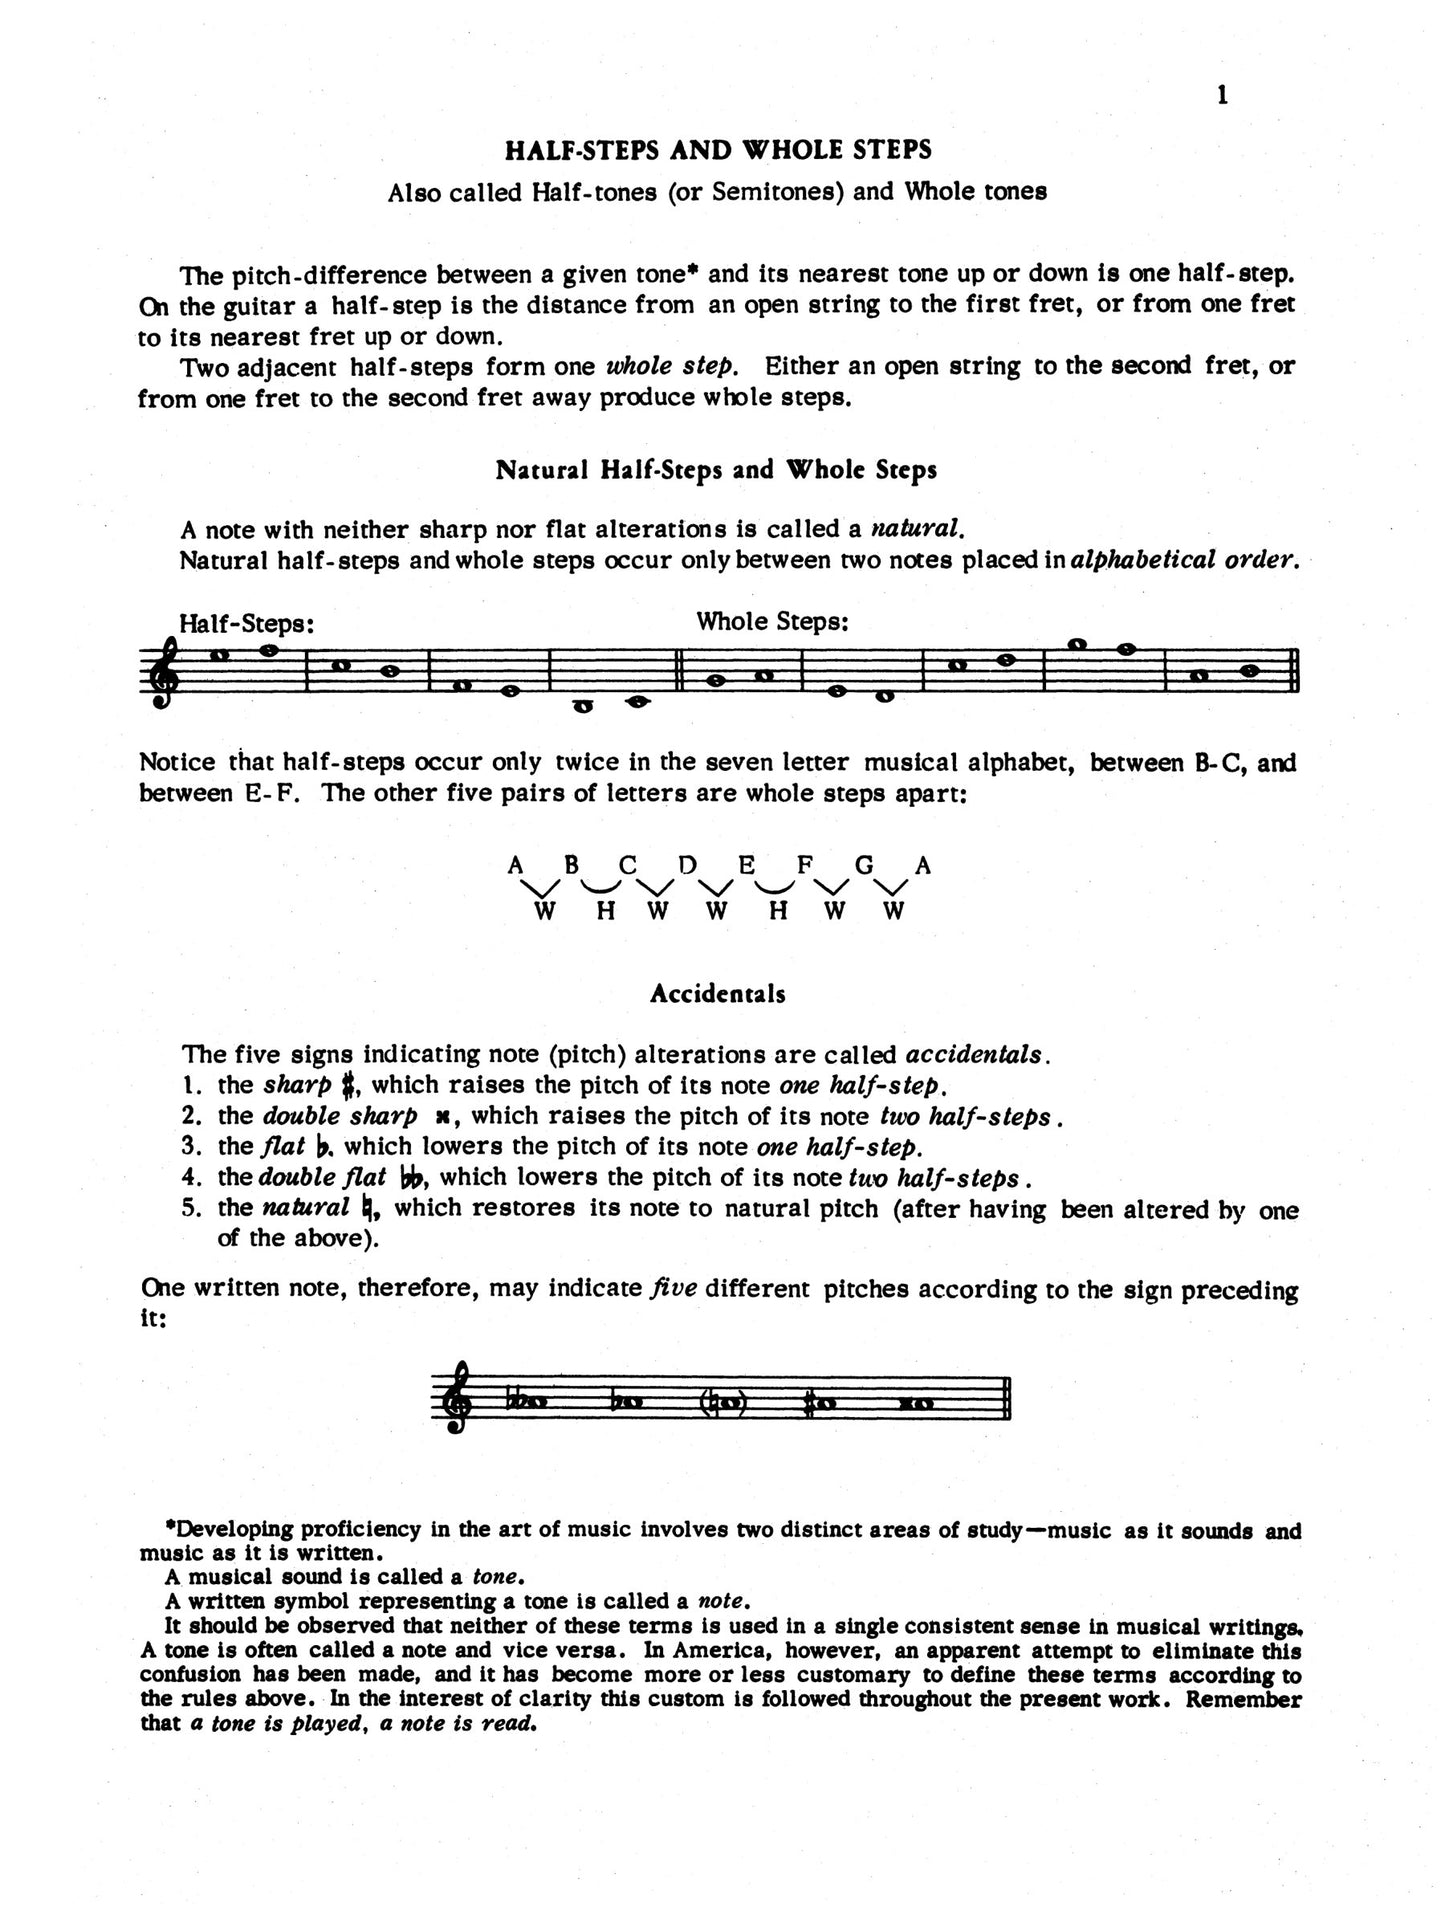 Shearer - Classic Guitar Technique Supplement 2 Book